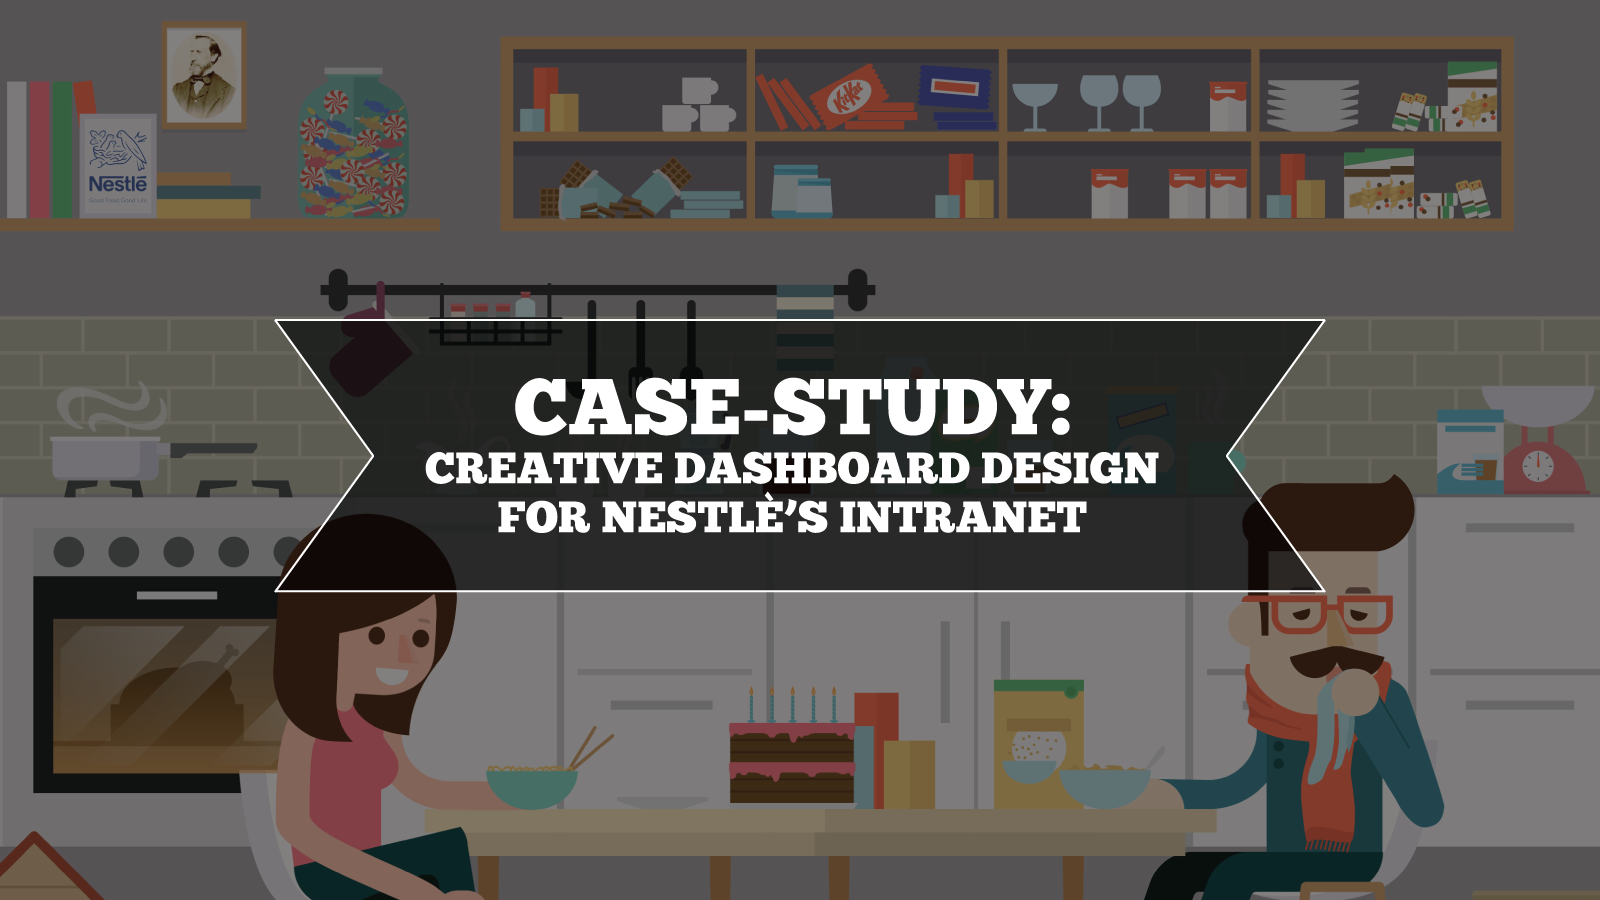 Case-study: Intranet Dashboard Design for Nestlé